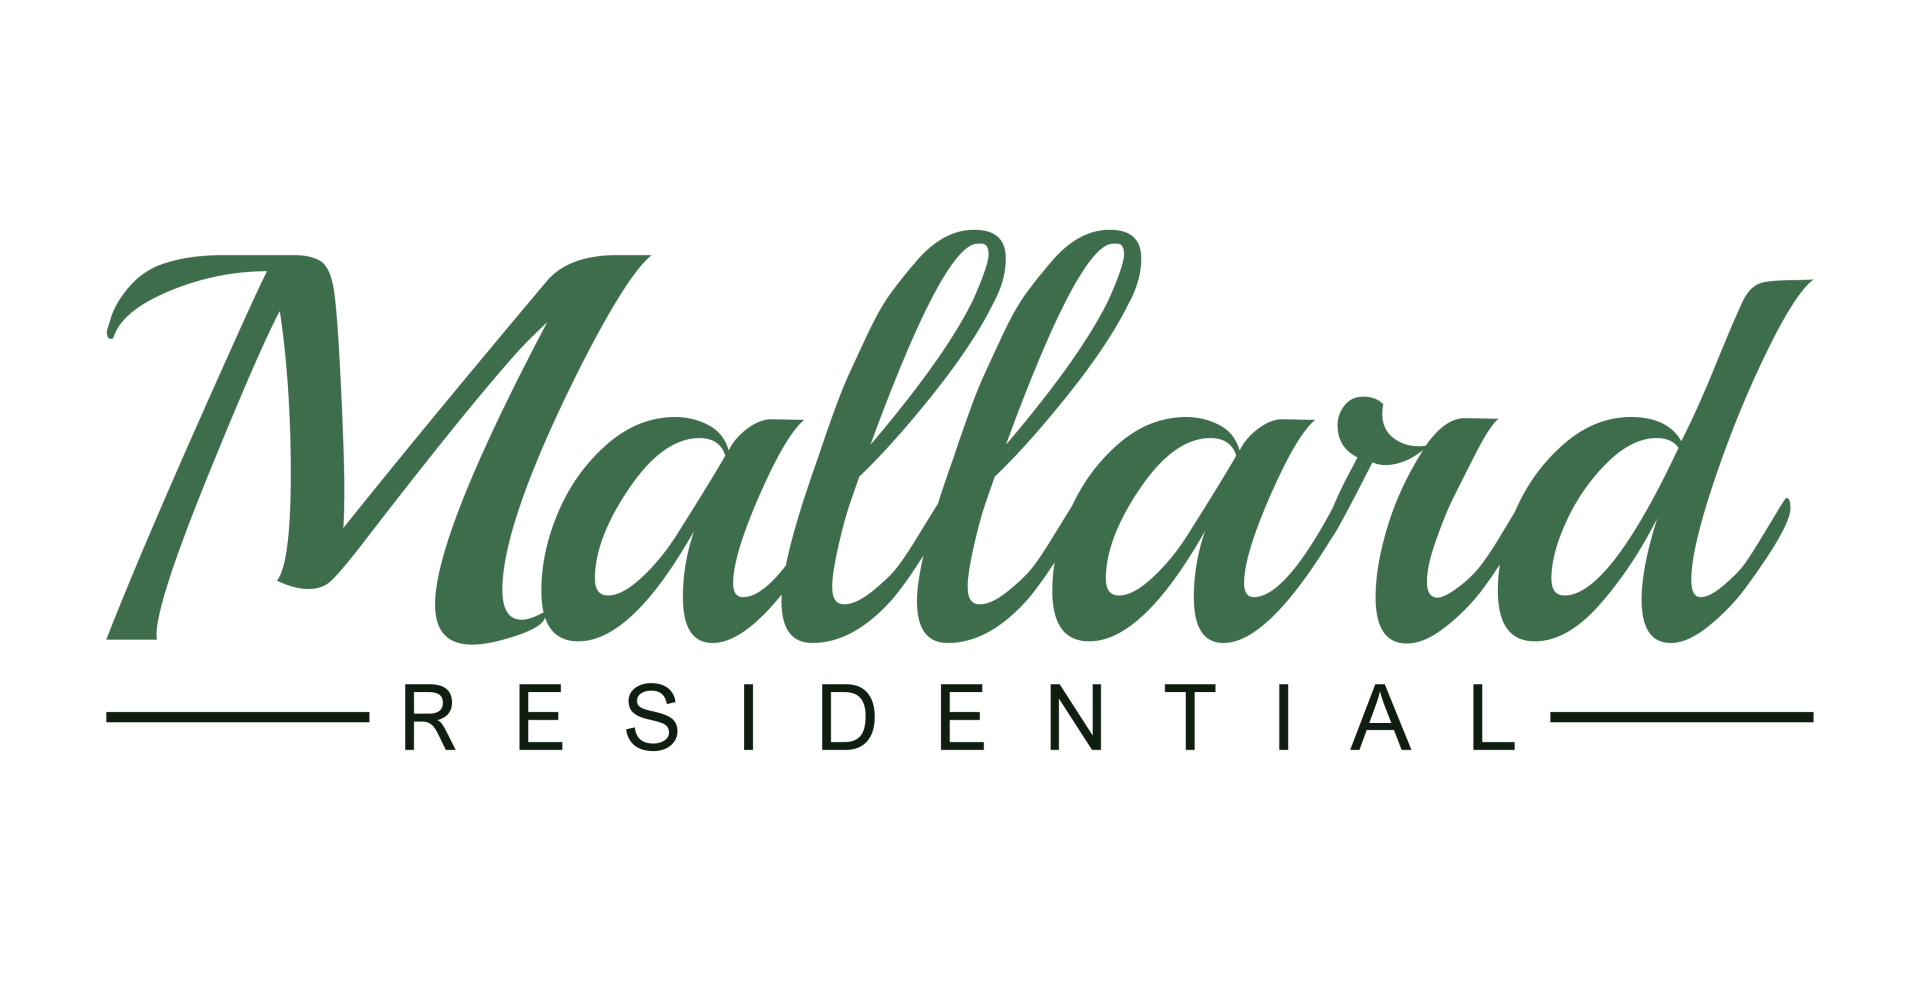 Mallard Residential